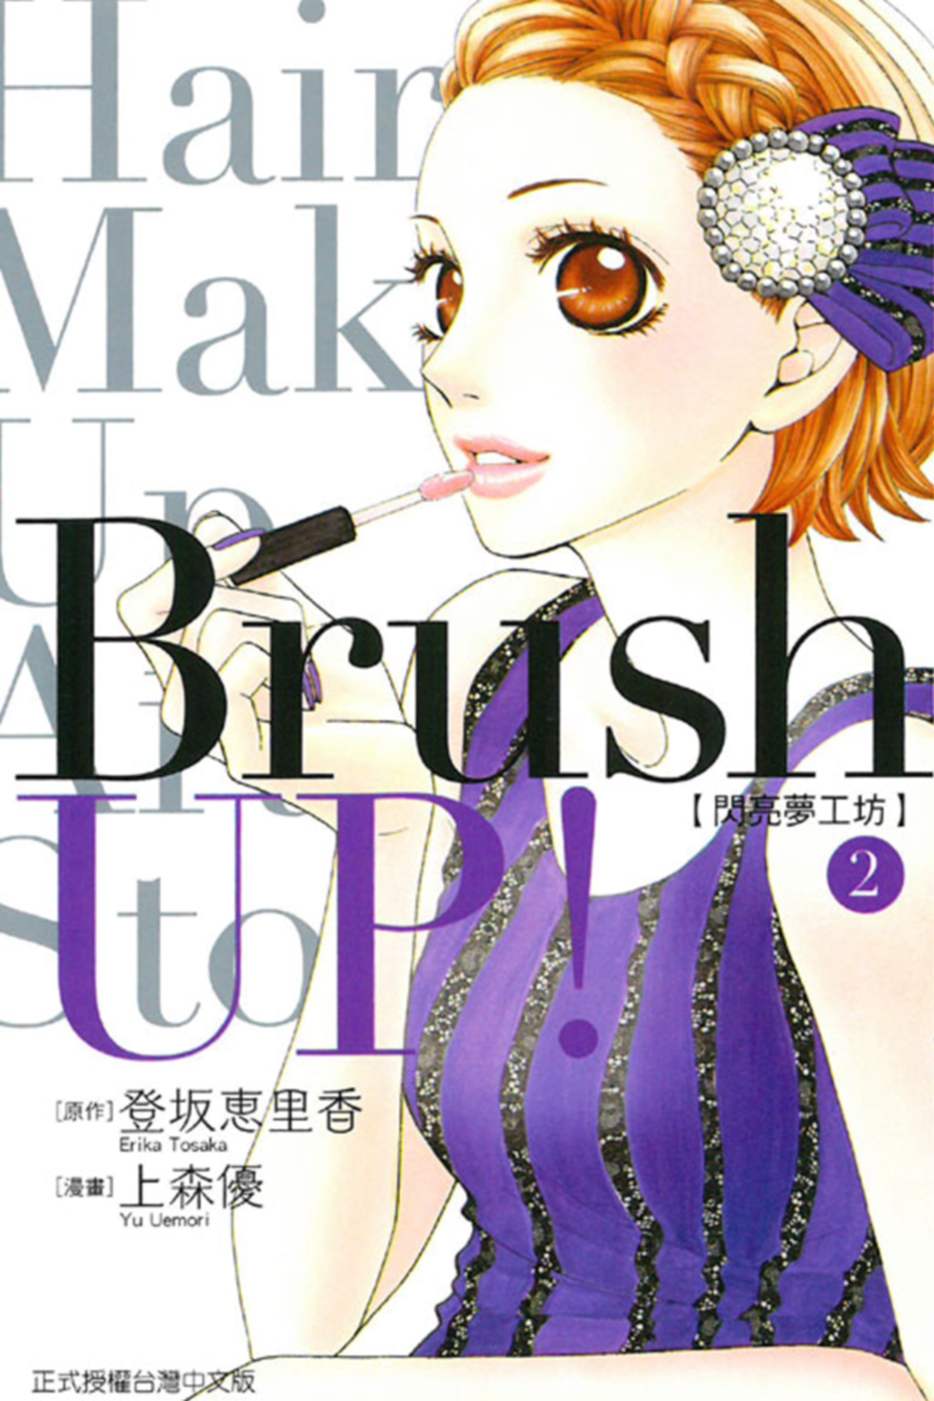 Brush UP!-閃亮夢工坊- 2完